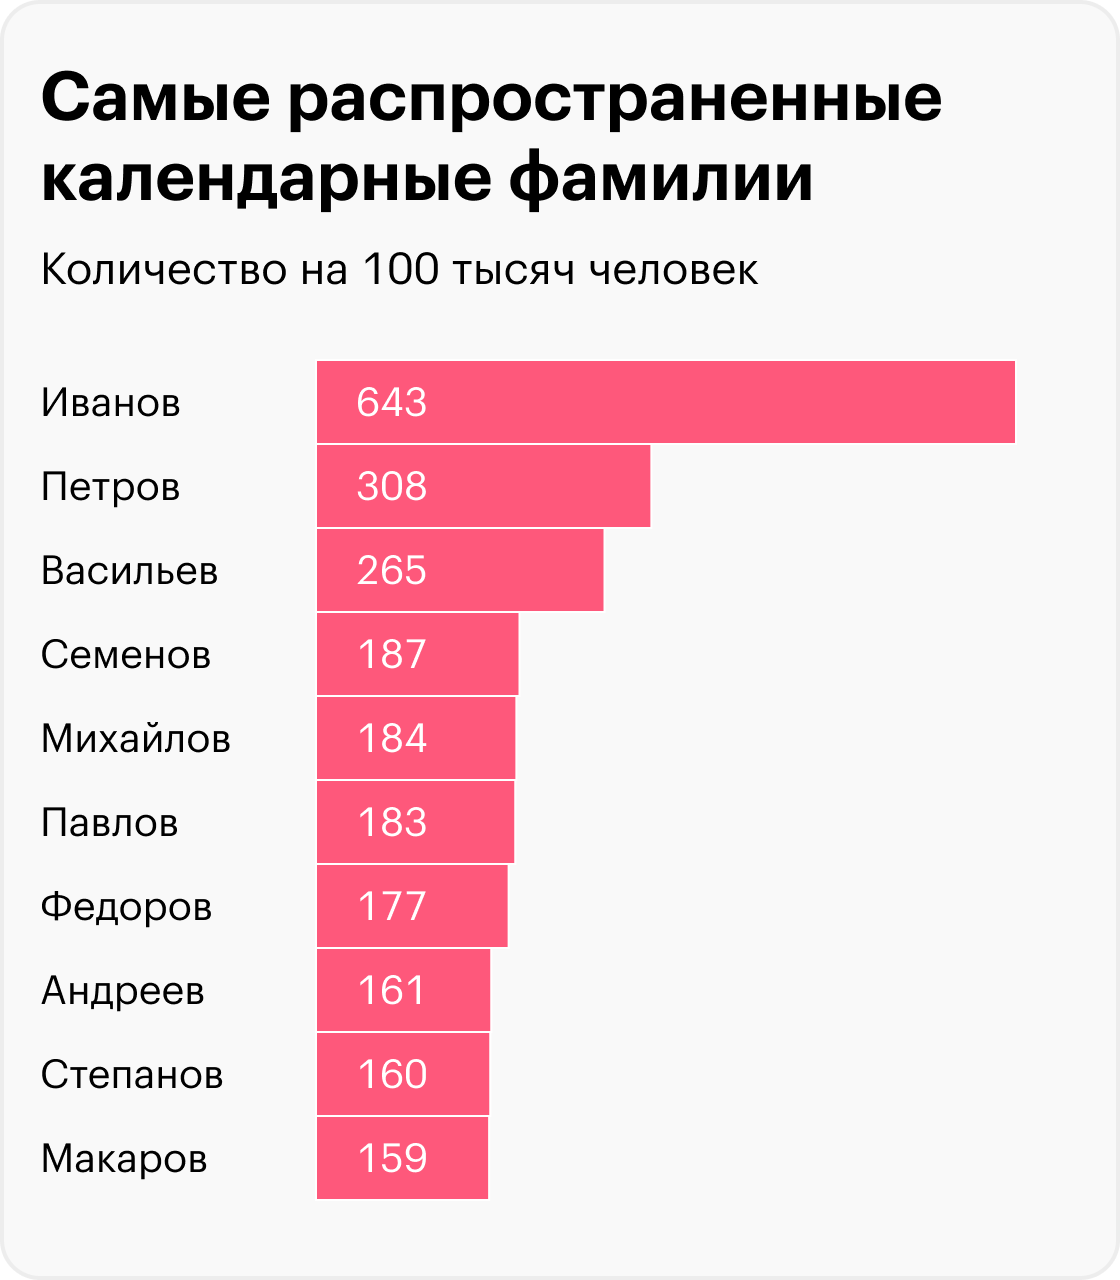 Источник: Surnames in modern Russia